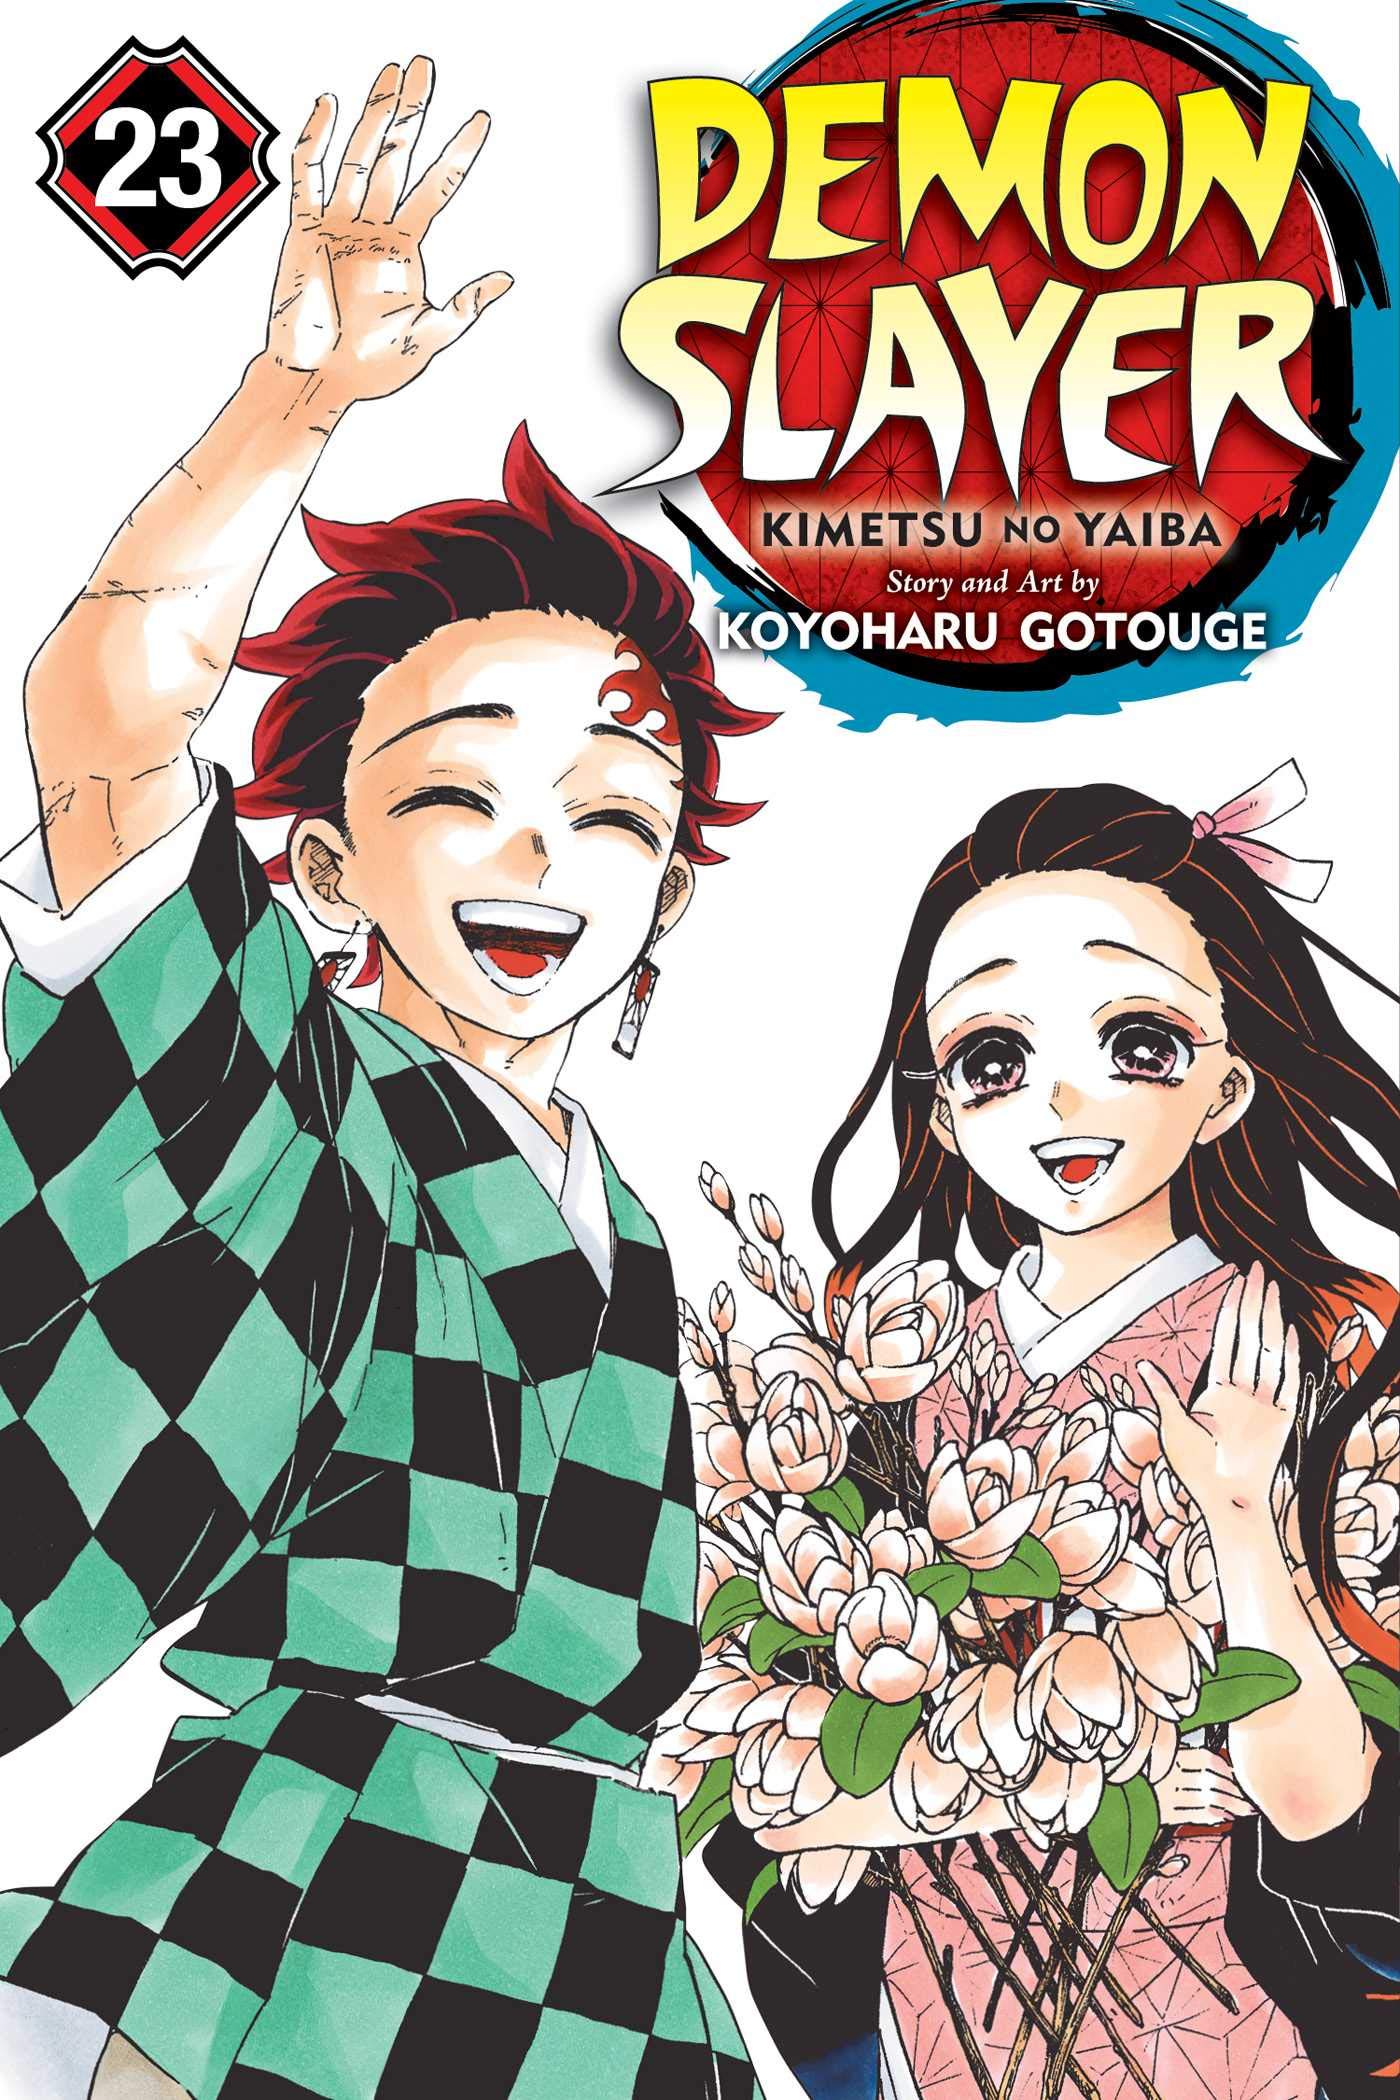 Cover of “Demon Slayer, Vol. 23” by Koyoharu Gotouge